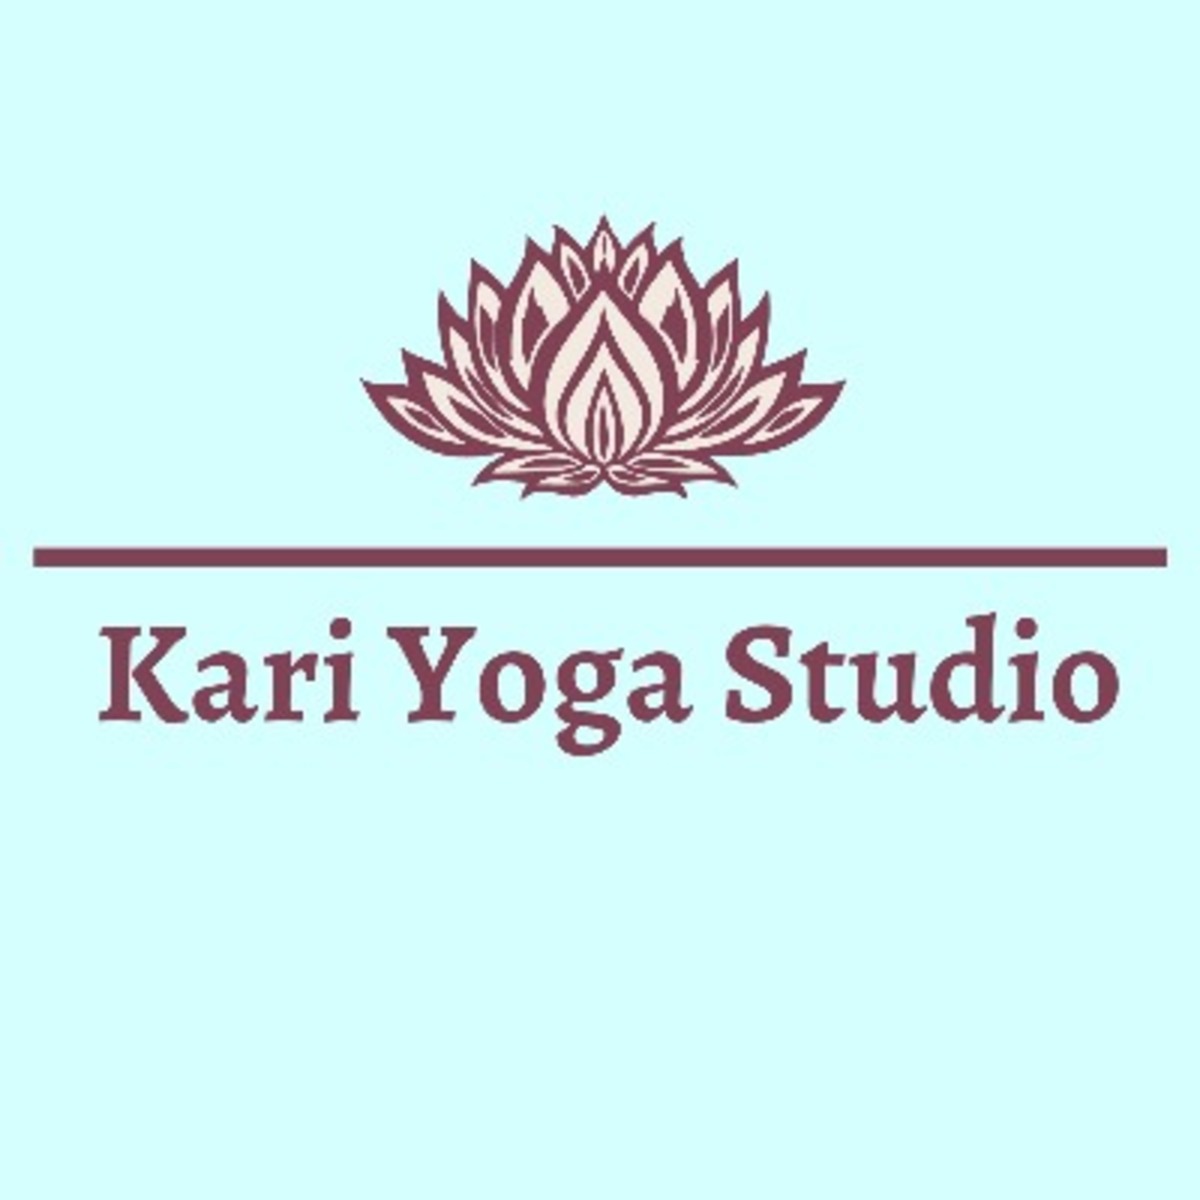 Kari Yoga Studio - Home